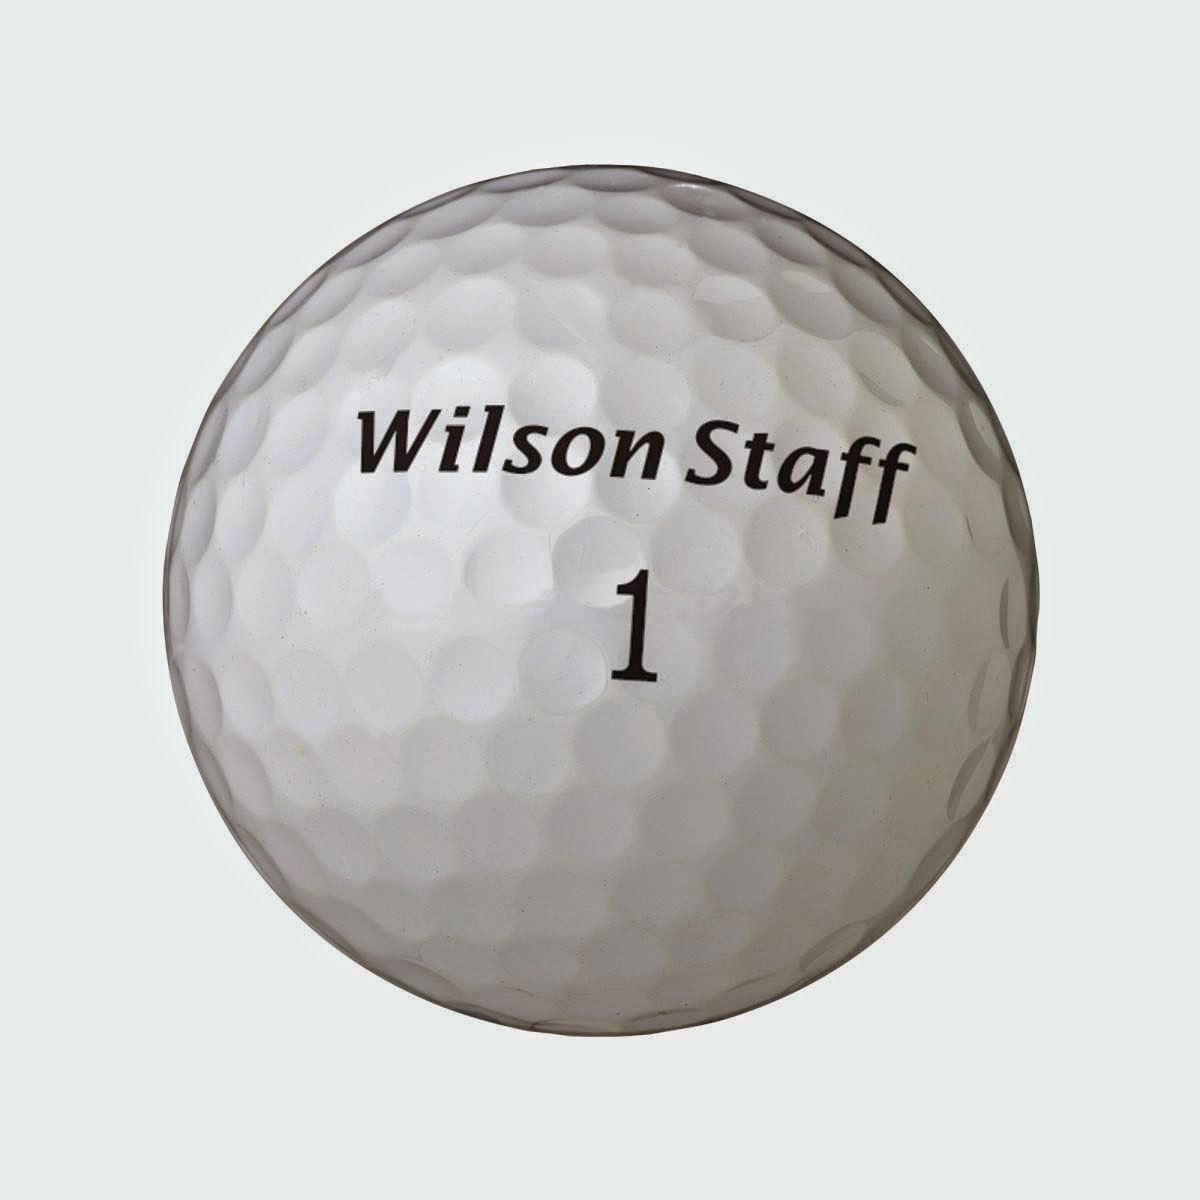 Мяч для гольфа тайтлест. Мяч для гольфа в разрезе. Вилсон мяч прозрачный. Wilson Pro staff мяч гольфа. Spinning ball